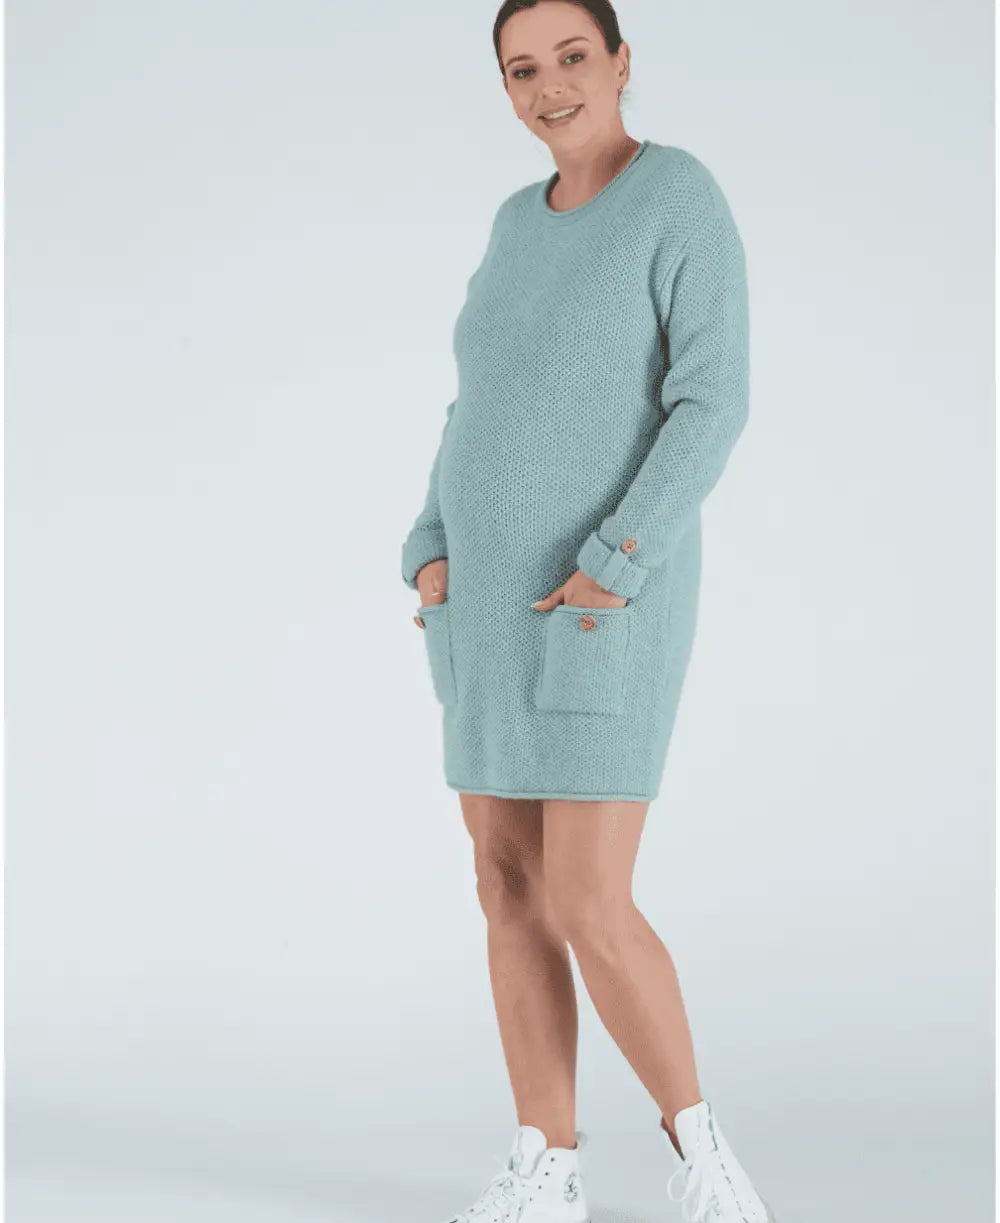 Pregnancy and nursing dress Honey sage - Robes